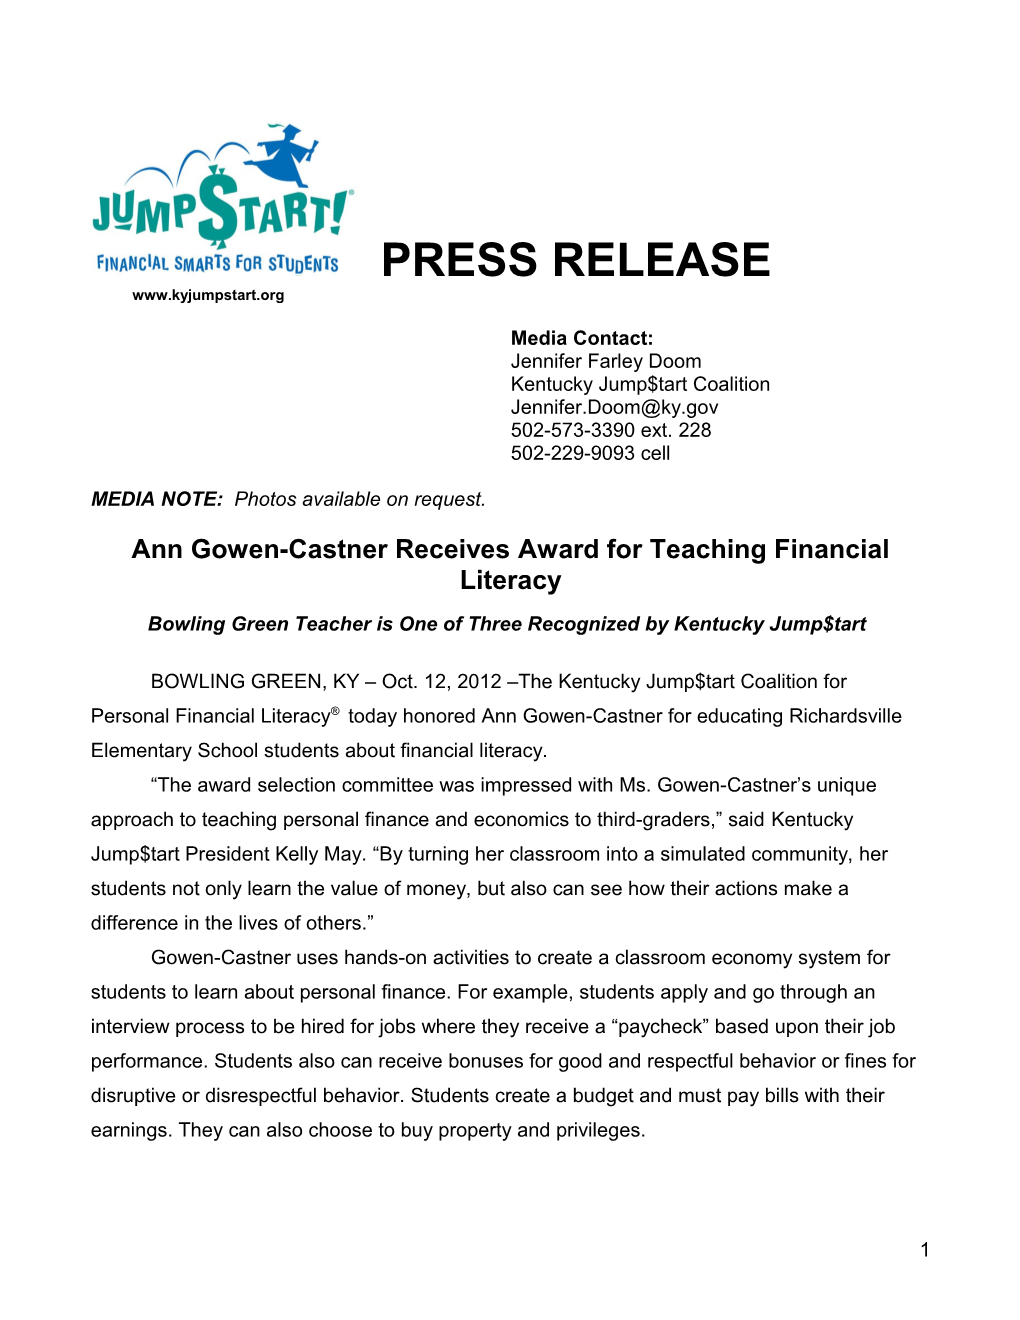 Ann Gowen-Castnerreceives Award for Teaching Financial Literacy